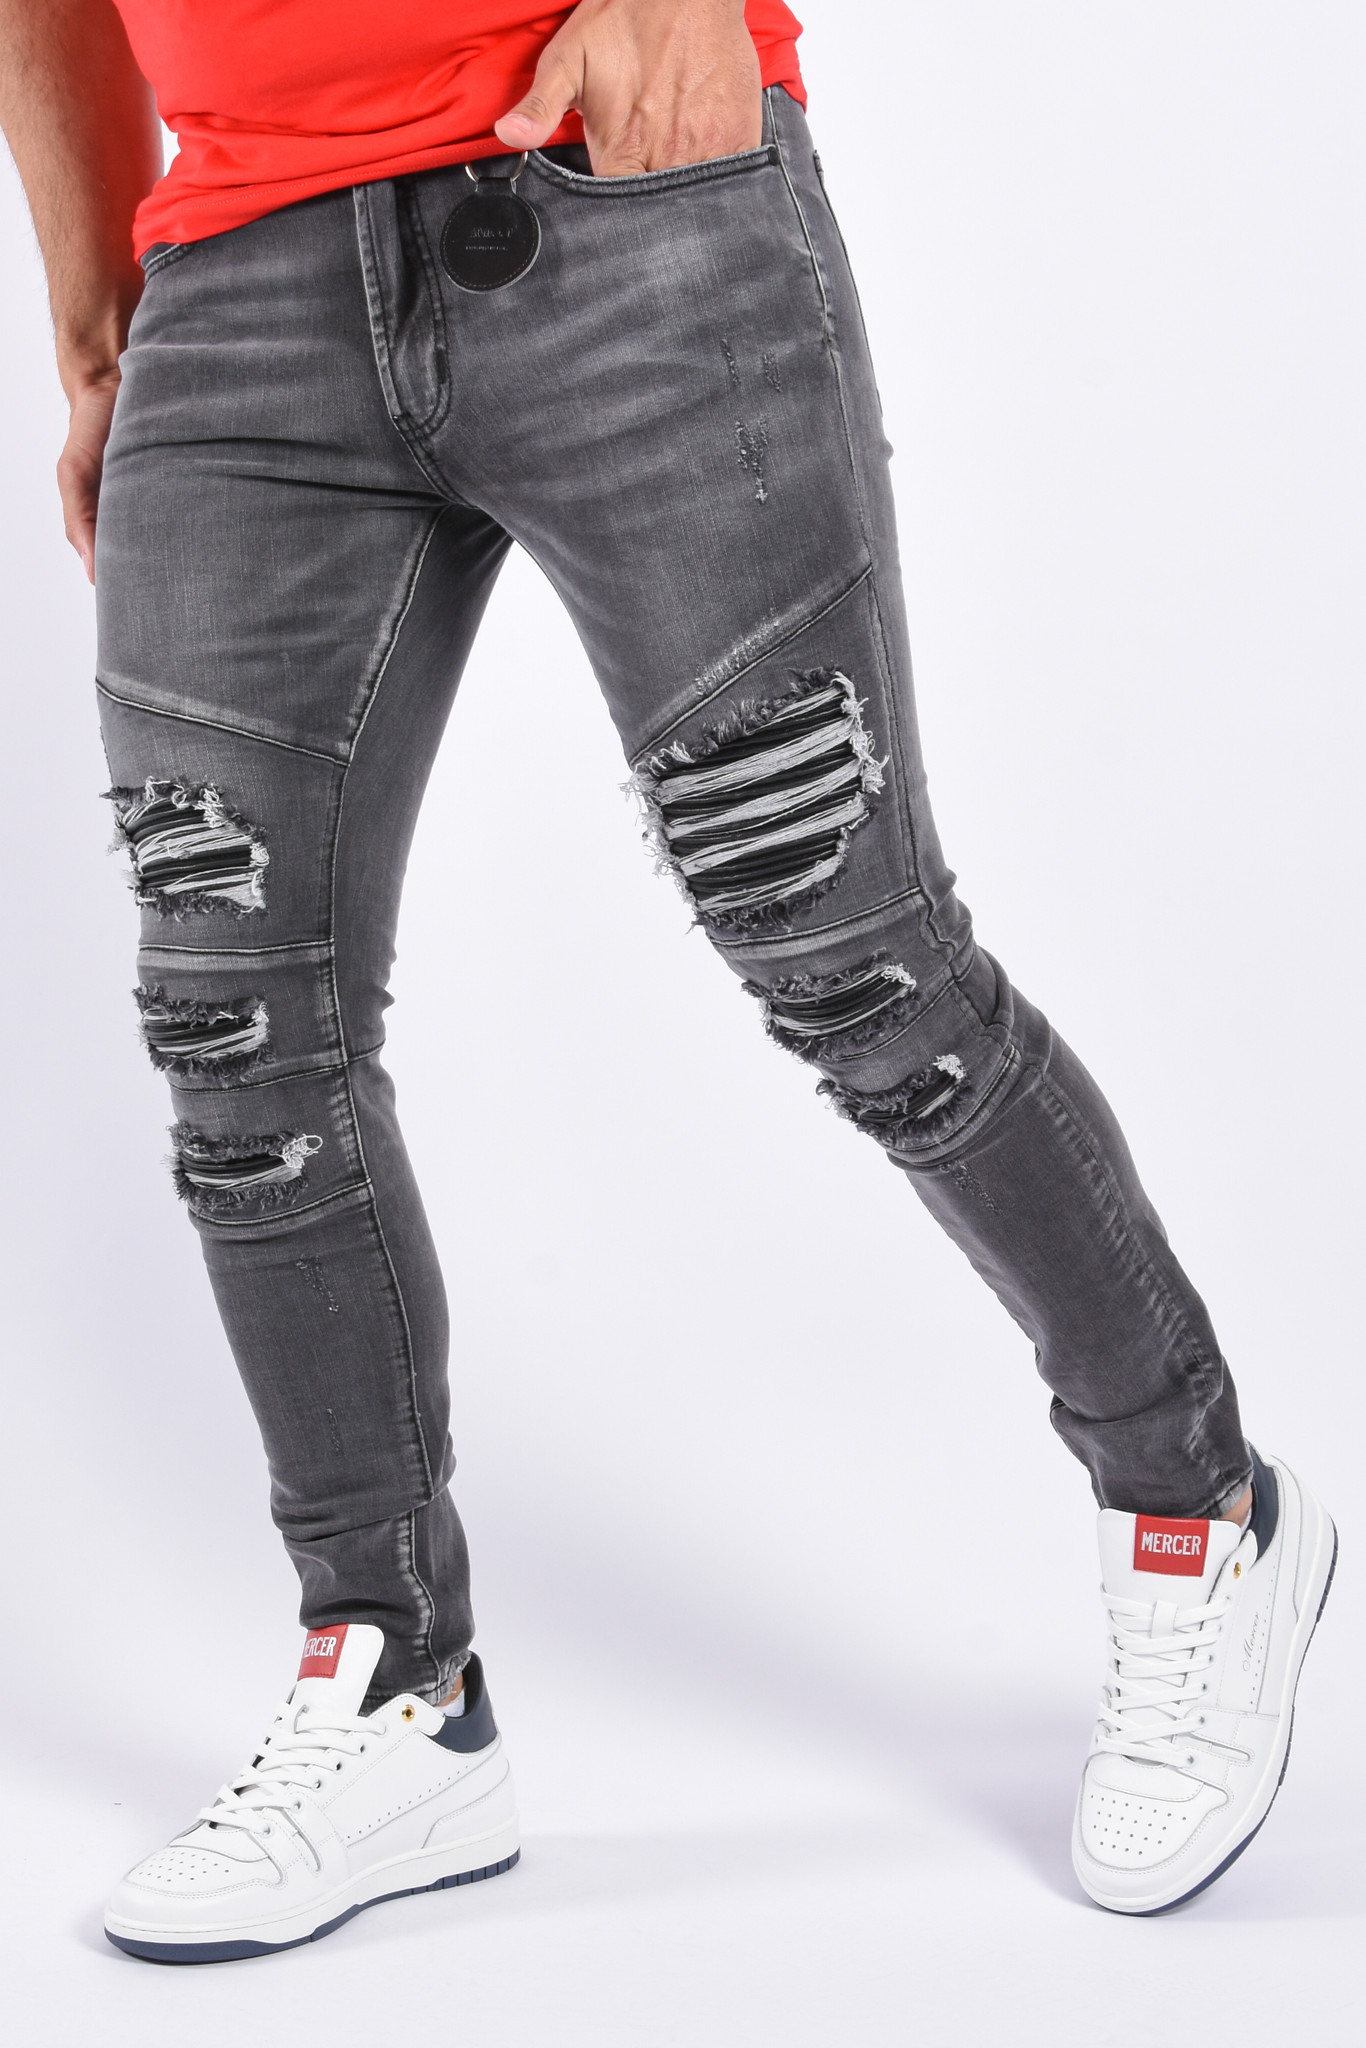 Amicci Premium Skinny Tapered Fit Stretch Jeans 'Sergio' Charcoal - Yugo Menswear Herenmode Winkel Heerlen en Online Webshop